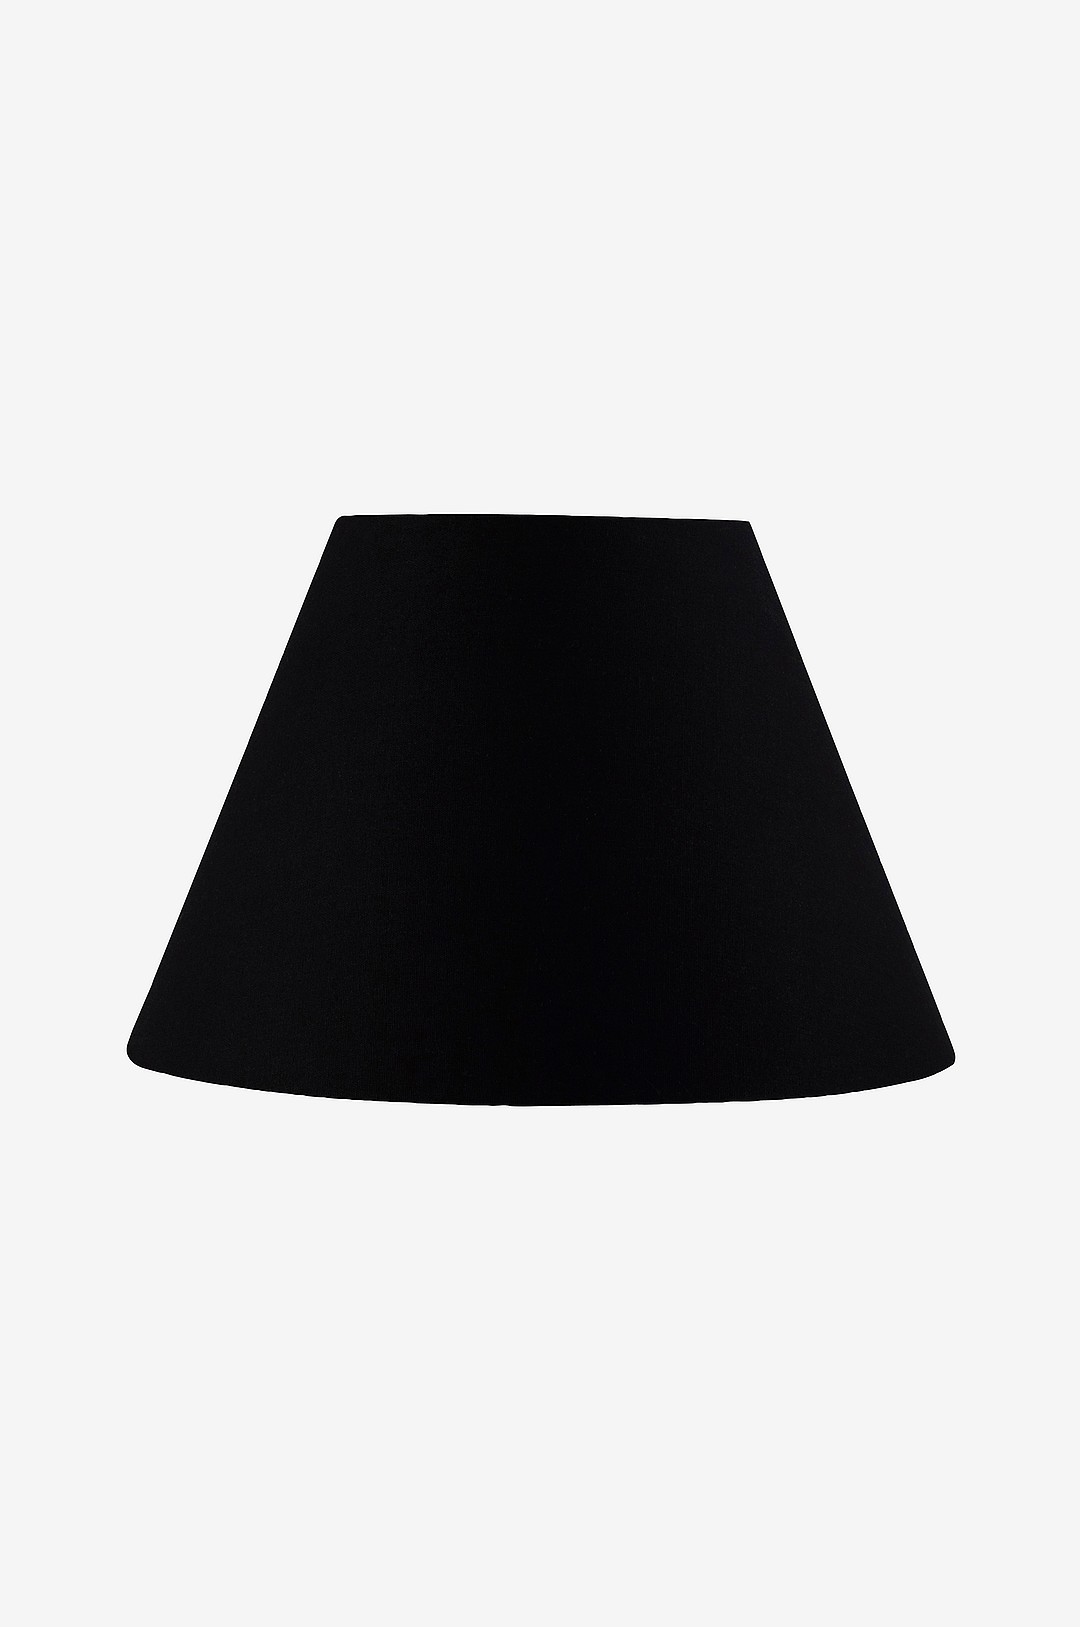 Globen Lighting - Lampskärm Sigrid ⌀ 40 cm - Svart